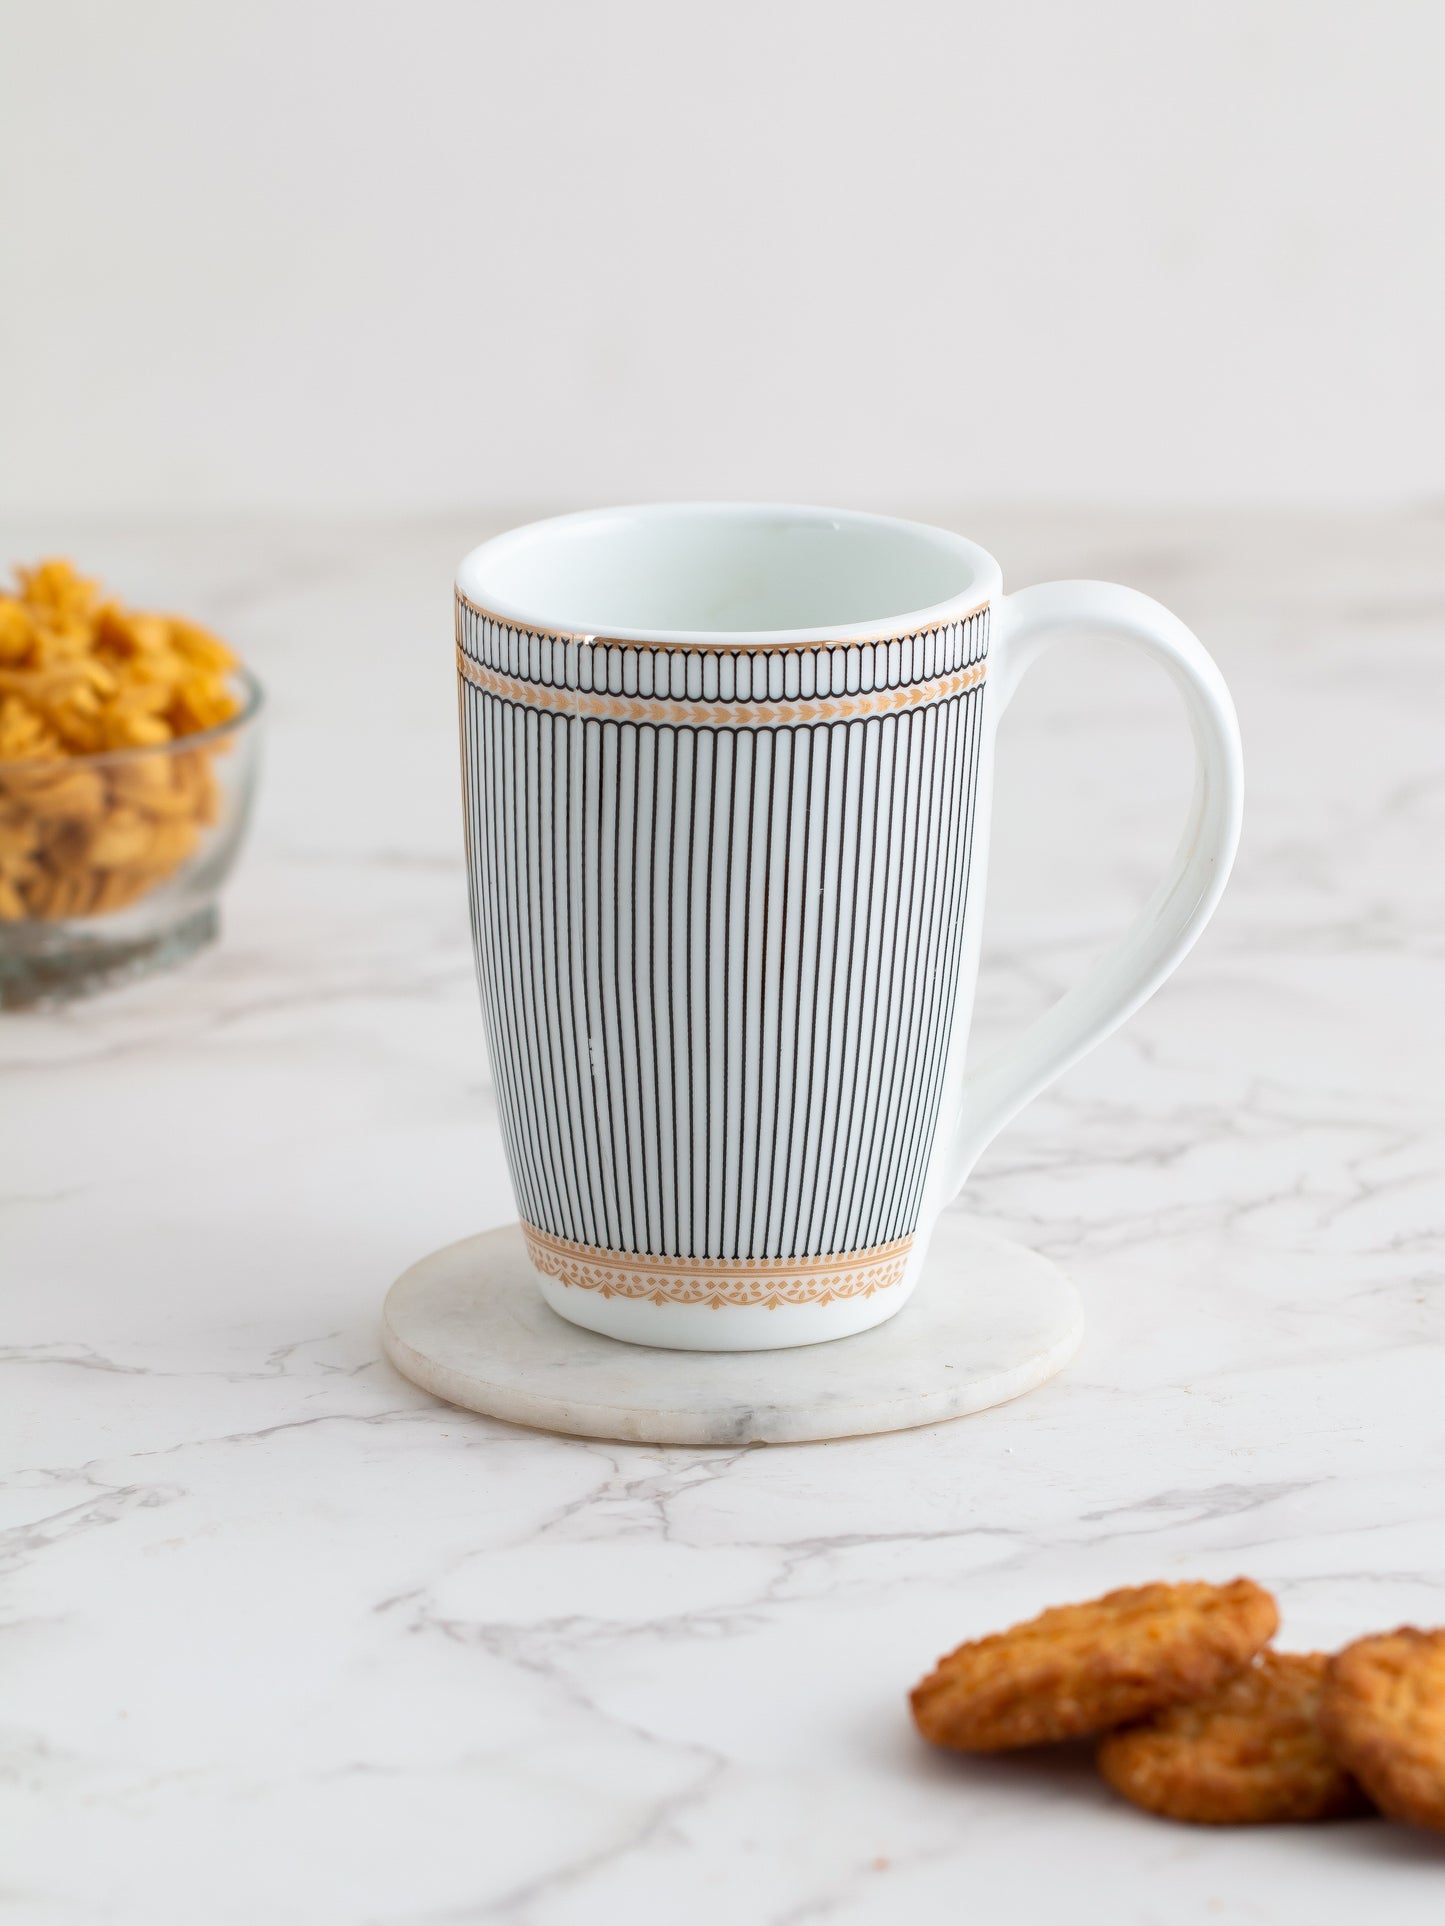 JCPL Orion Striped Coffee & Milk Mug 260ml, 1 Piece, OR2